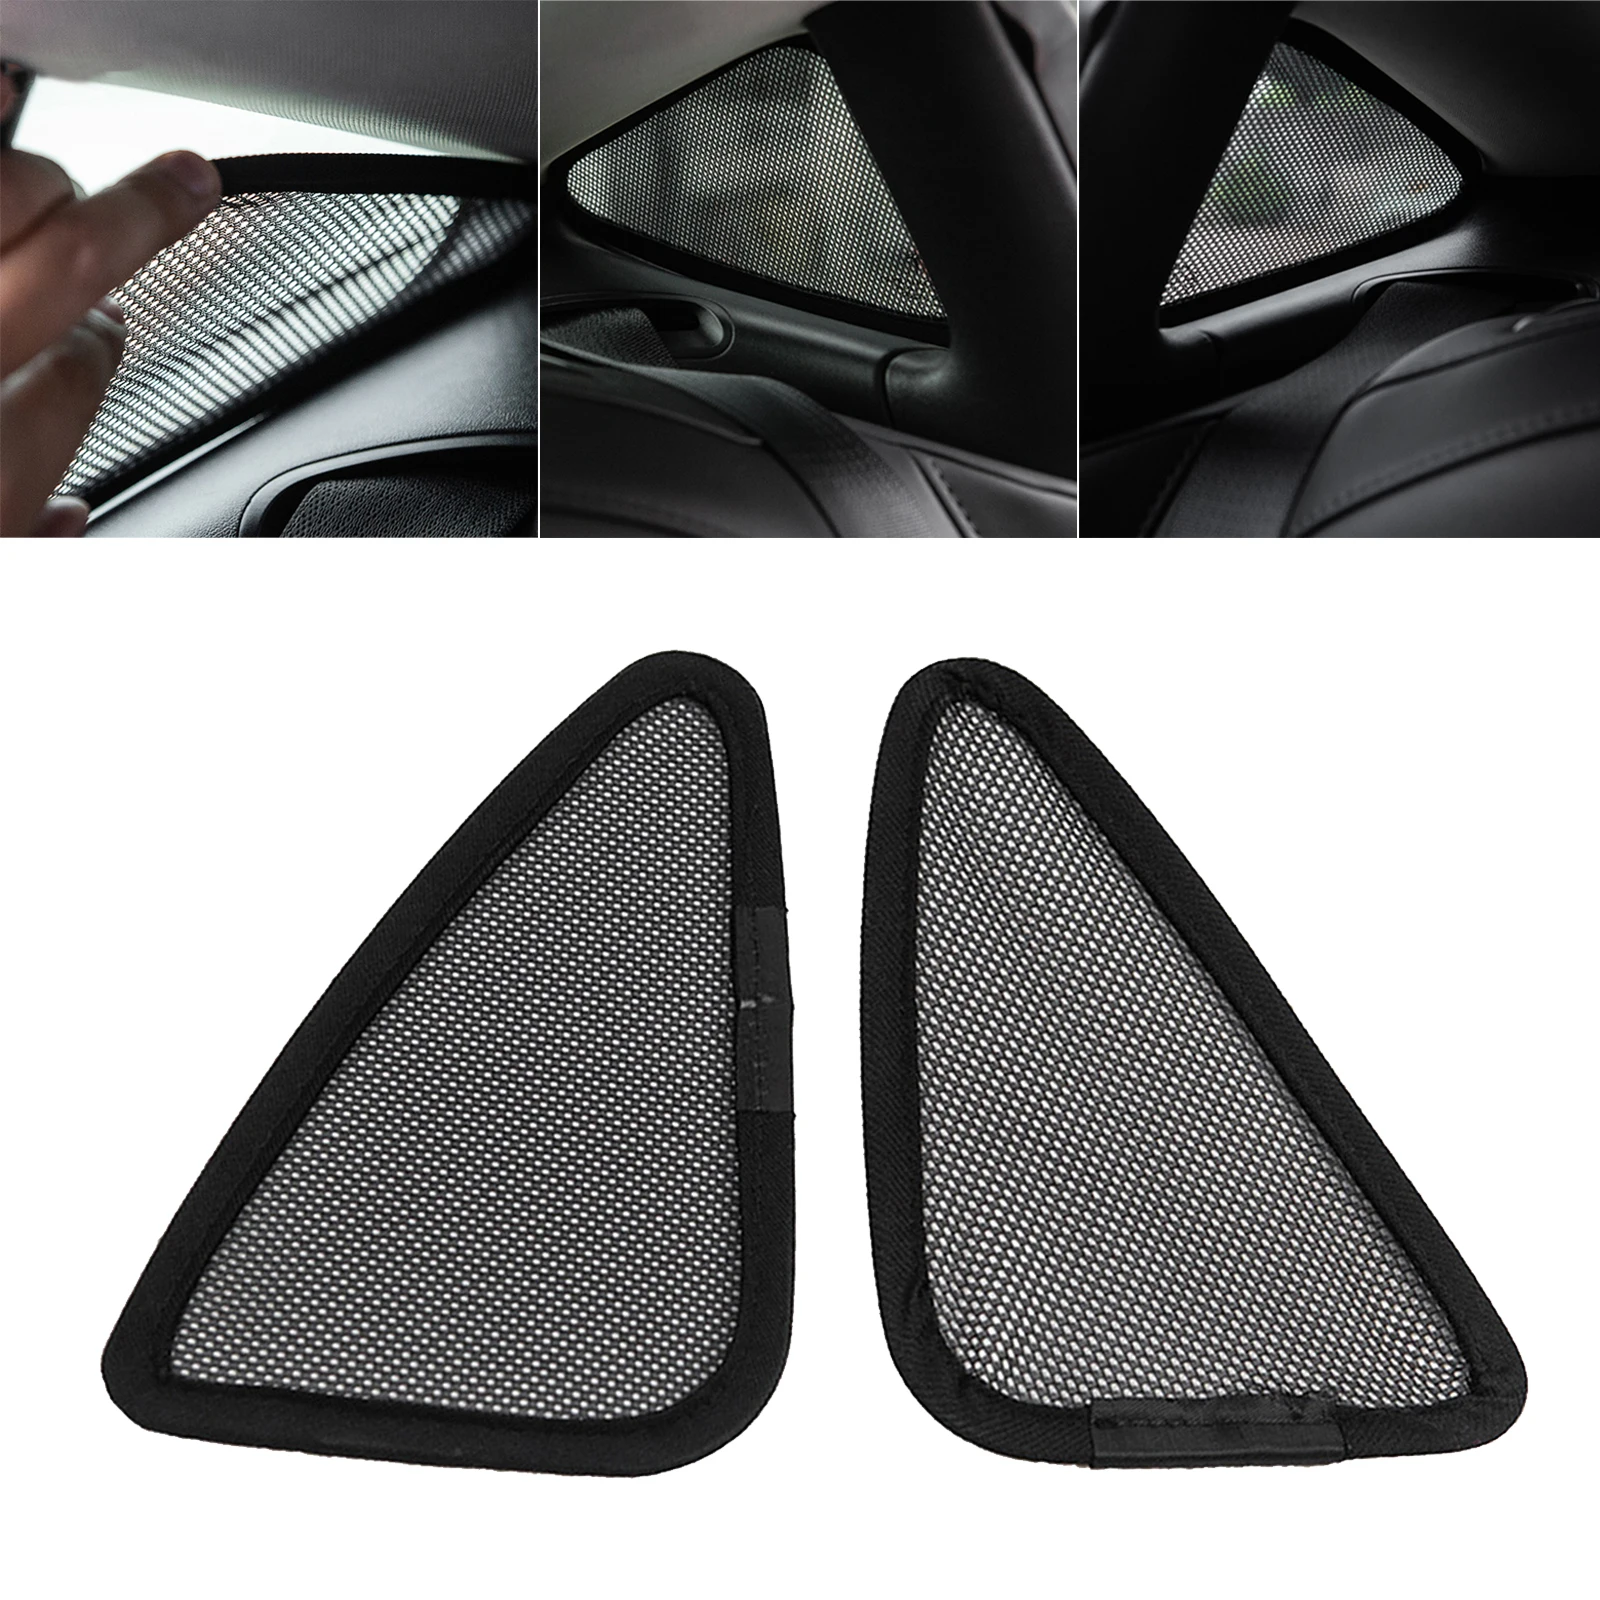 2Pcs Car Sunshade Cover Triangular Net for Tesla Model 3, Easy Install